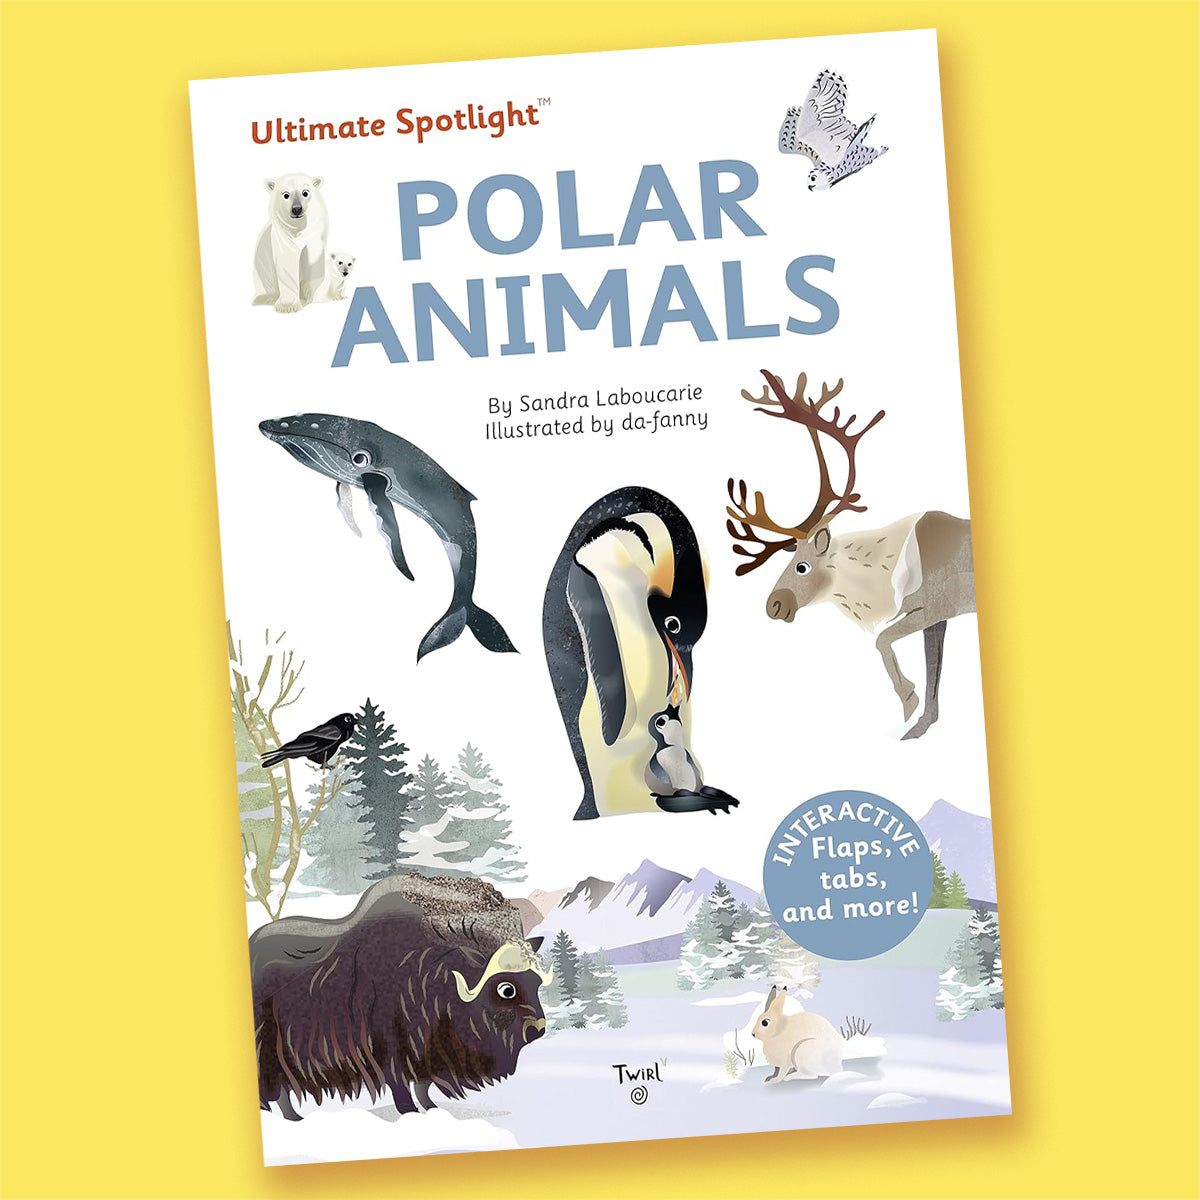 Ultimate Spotlight: Polar Animals by Sandra Laboucarie and da-fanny